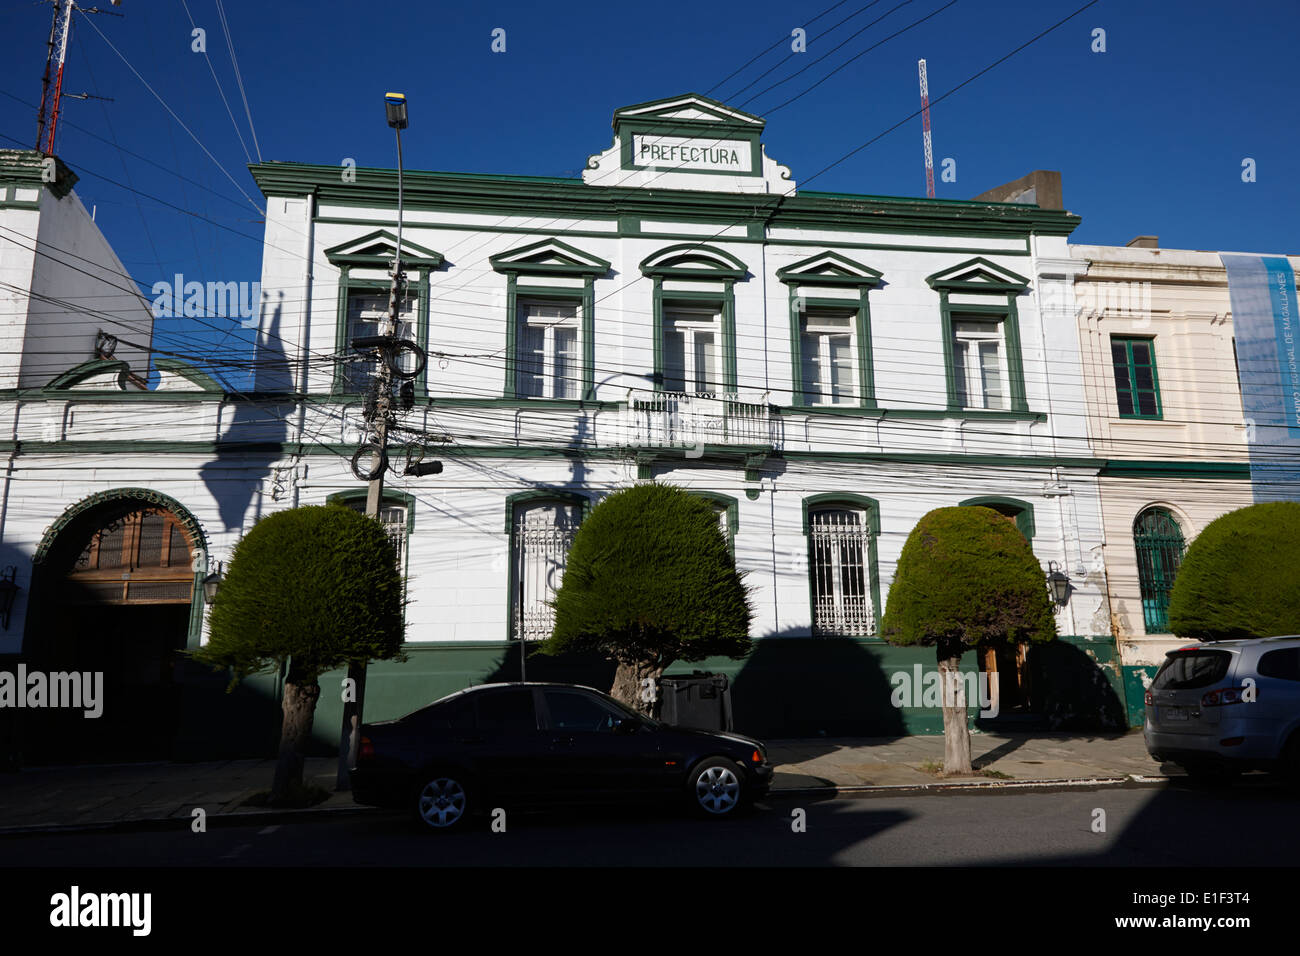 Préfecture de police des carabiniers du Chili de police de prefectura Punta Arenas Chili Banque D'Images